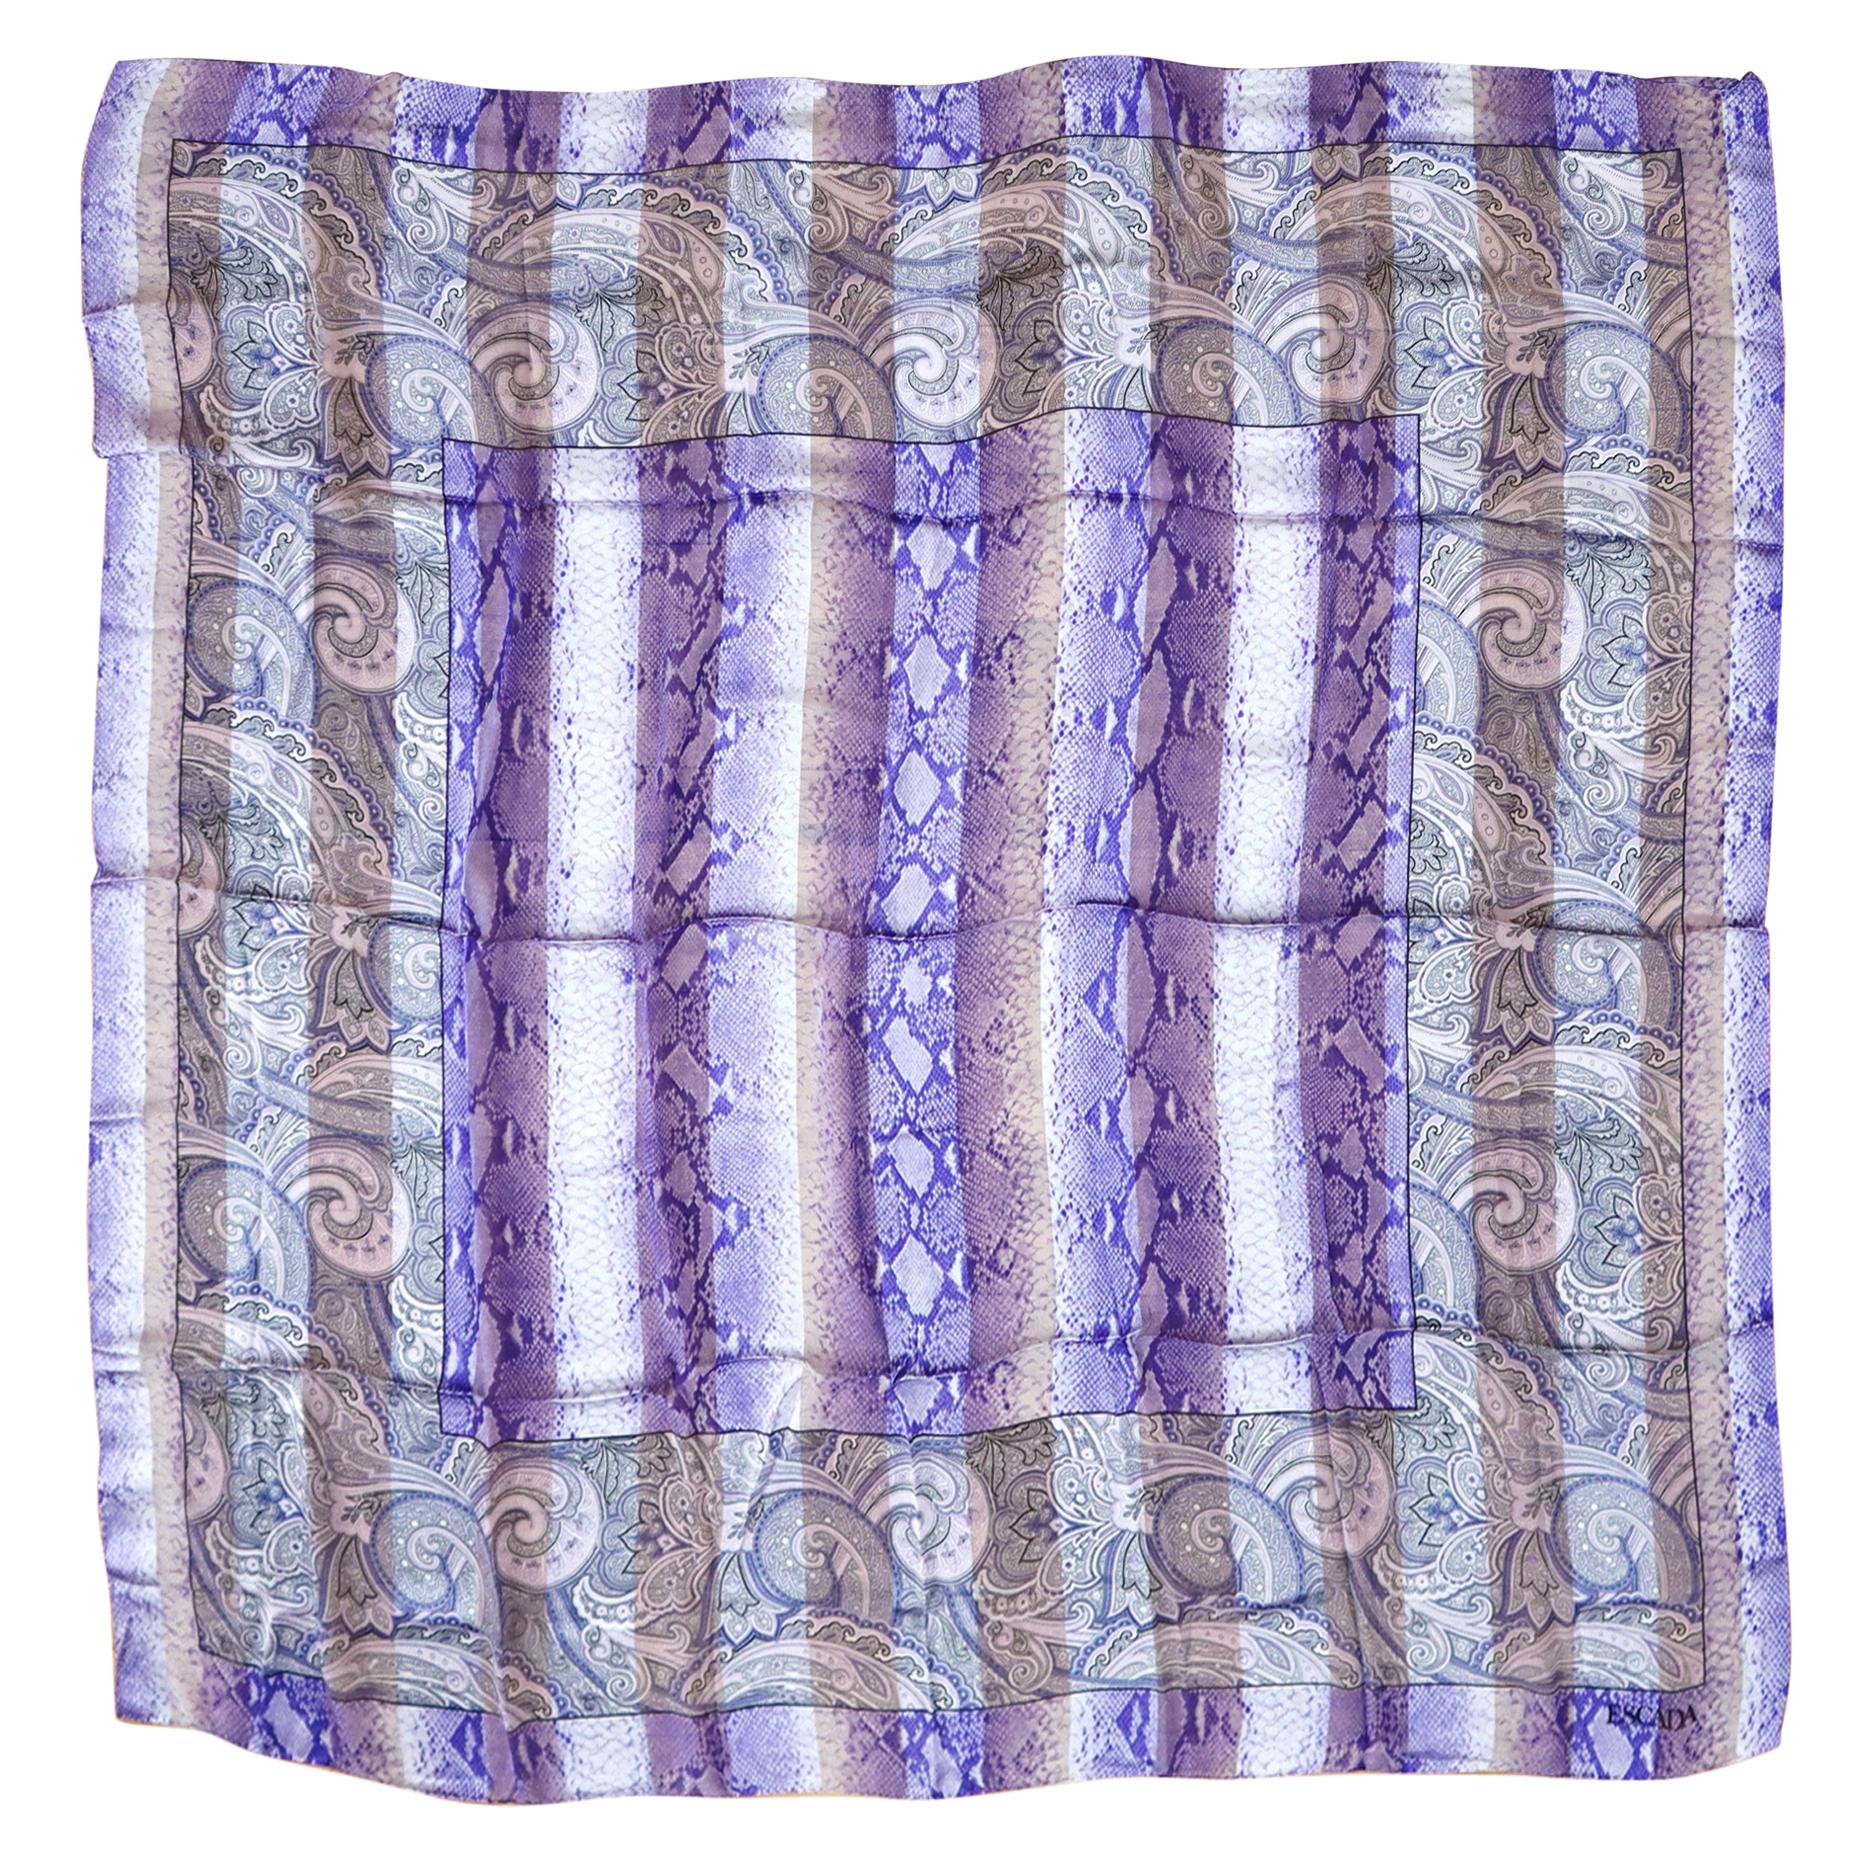 Silk Escada Scarf Purple - Paisley Snake Print New, Never worn -1990's  